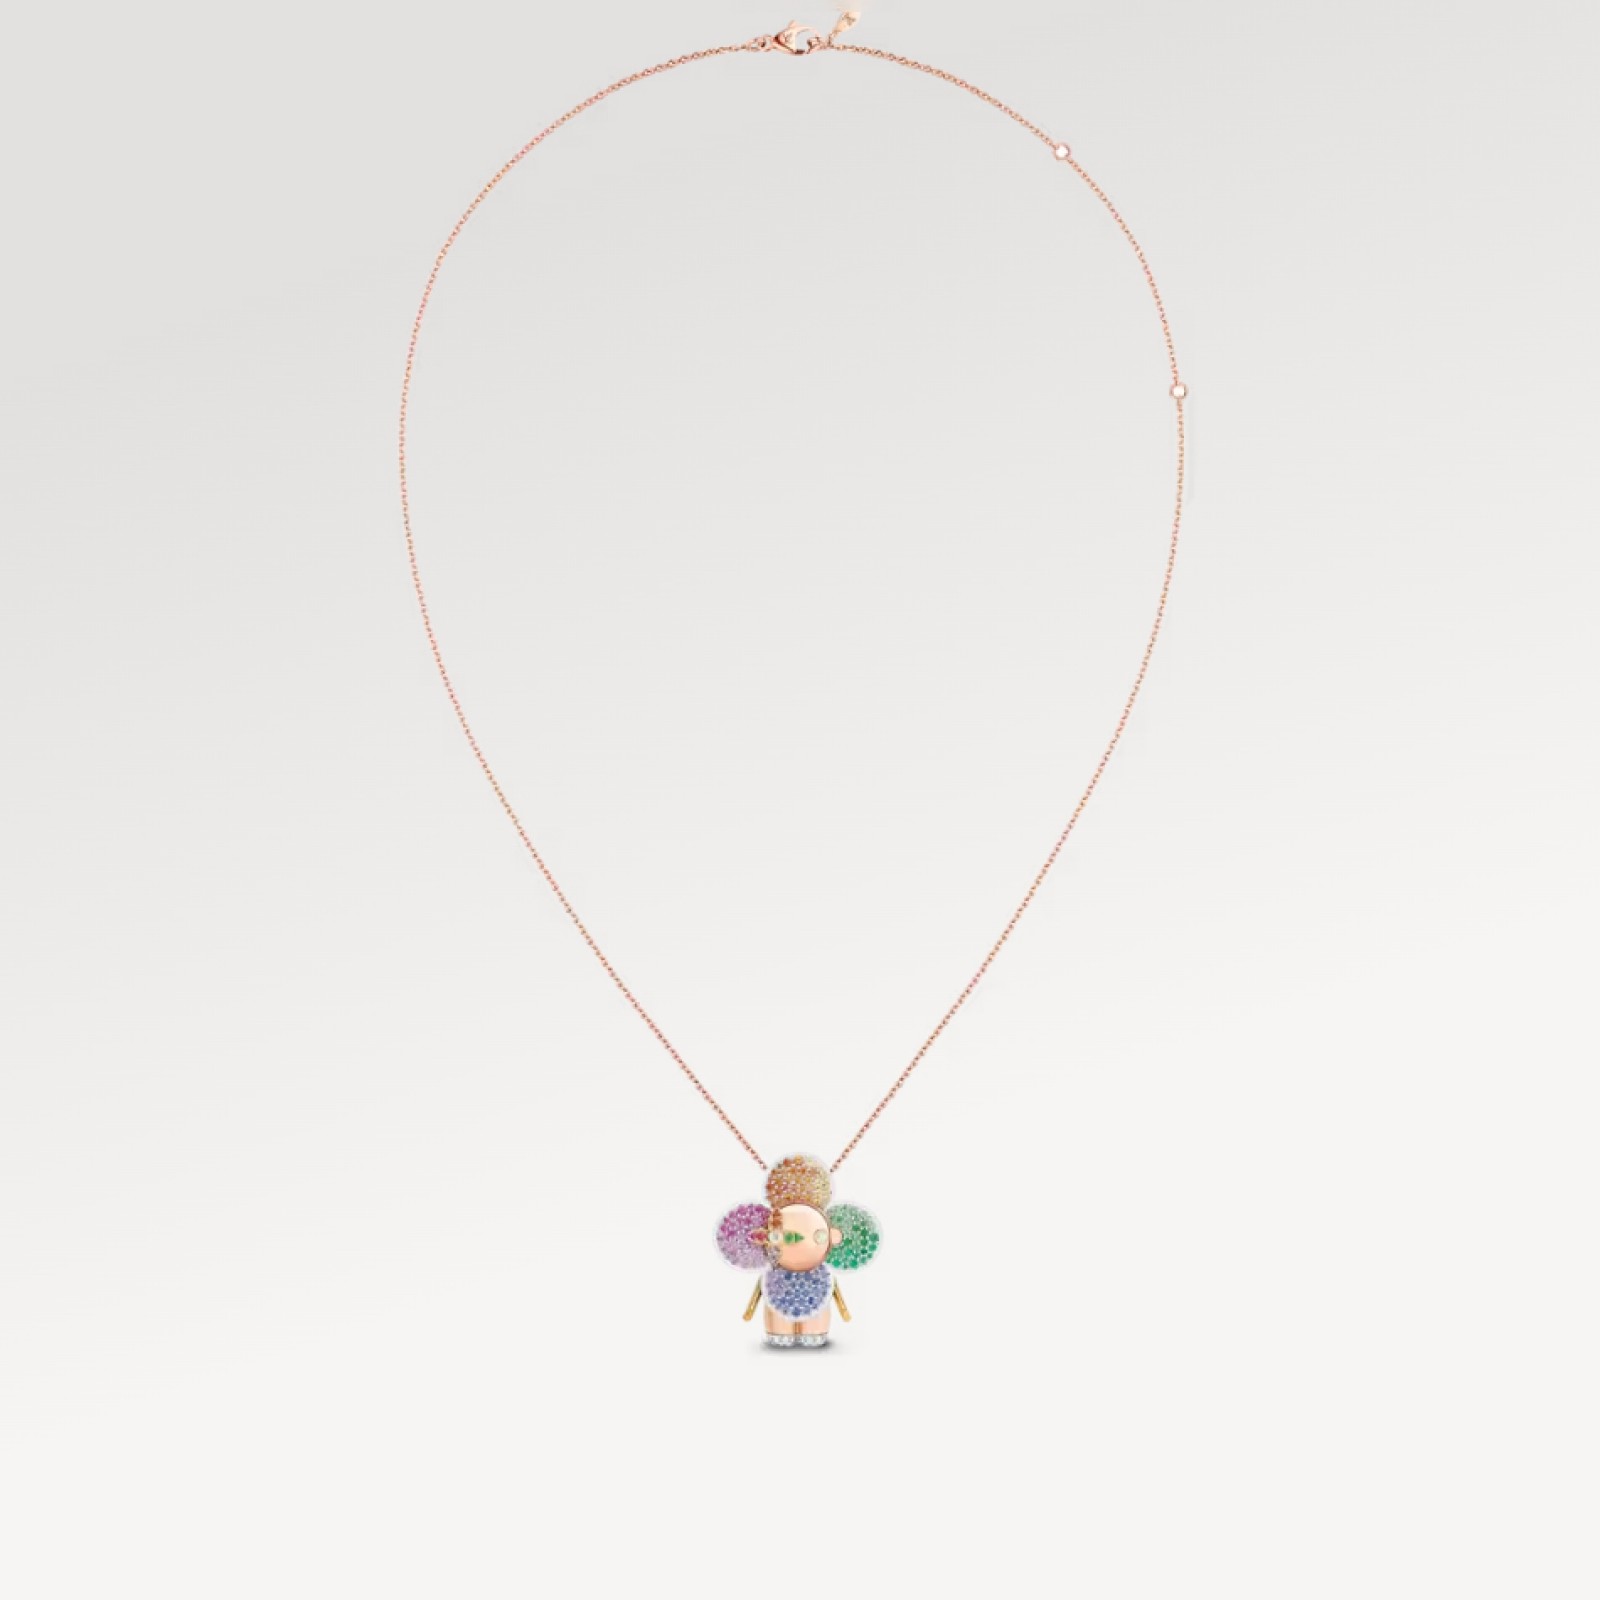 Vivienne Rainbow Pendant, 3 Golds, Diamonds & Colored Gemstones